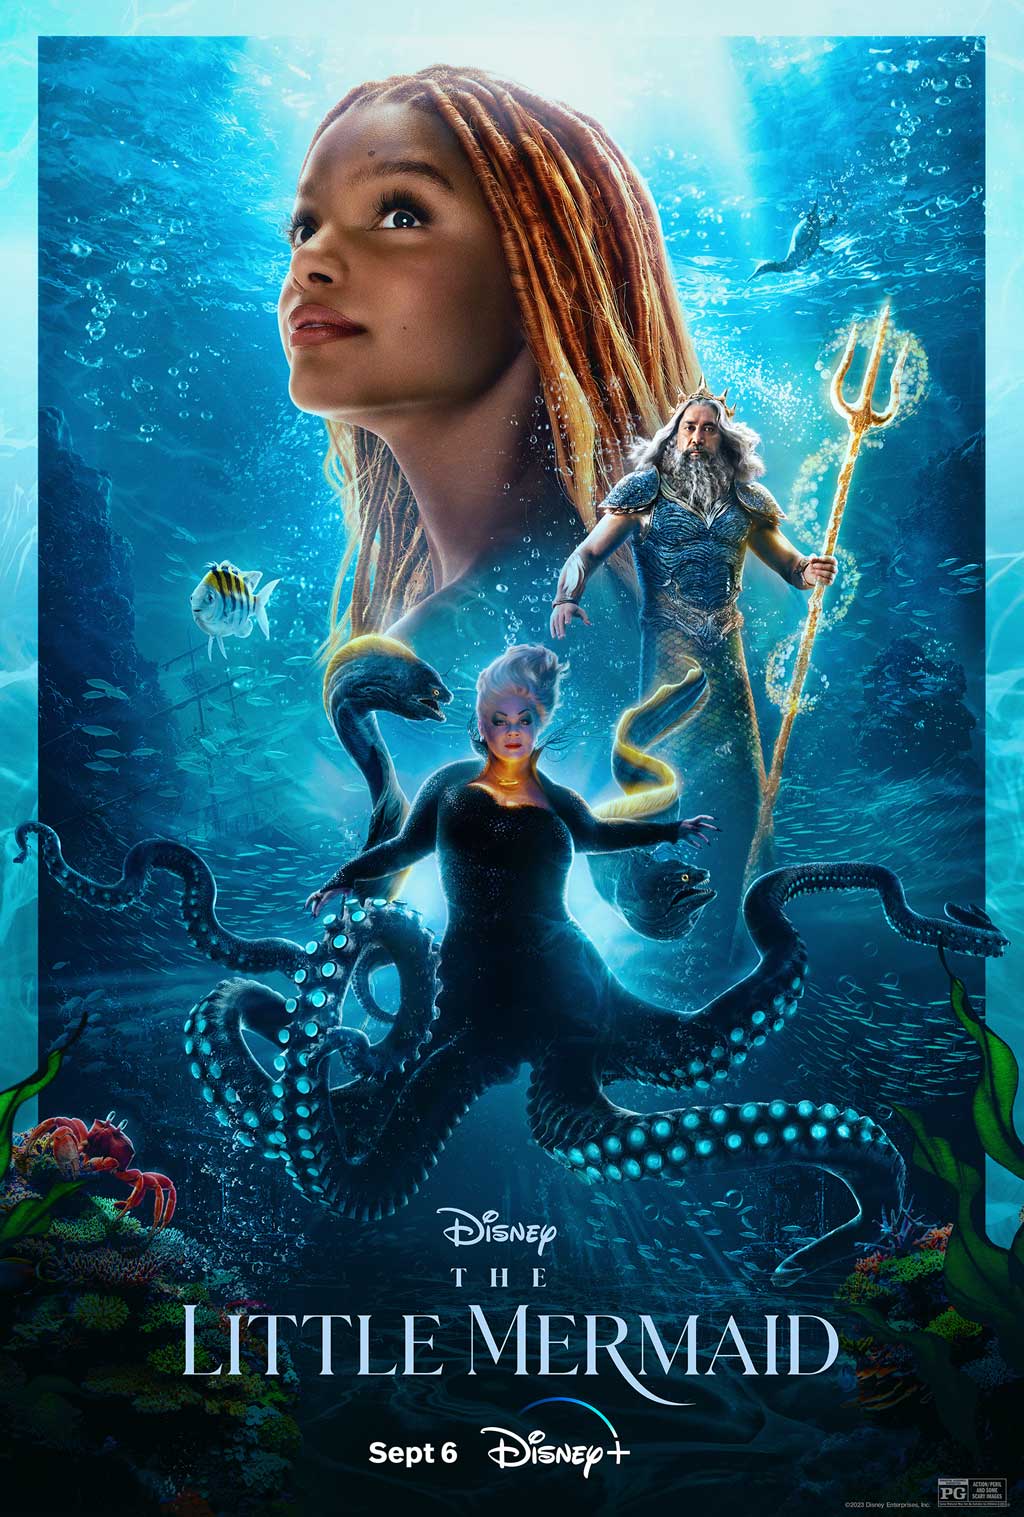 The Little Mermaid on Disney+